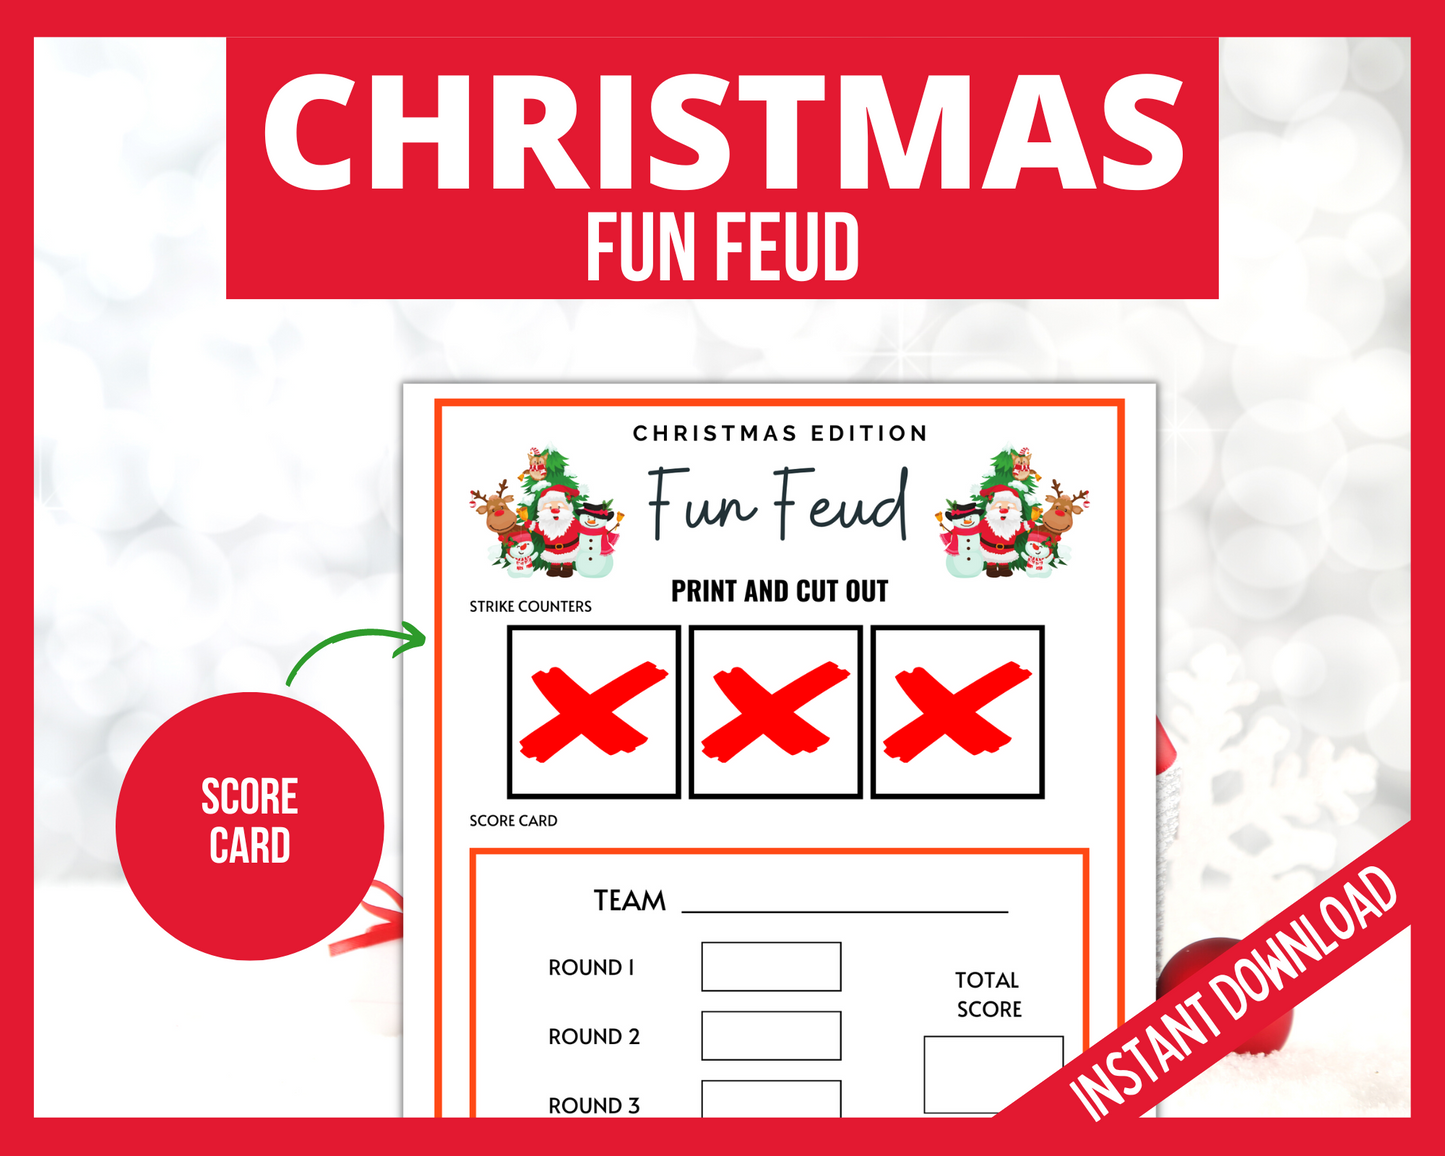 Christmas Fun Feud Family Score Card